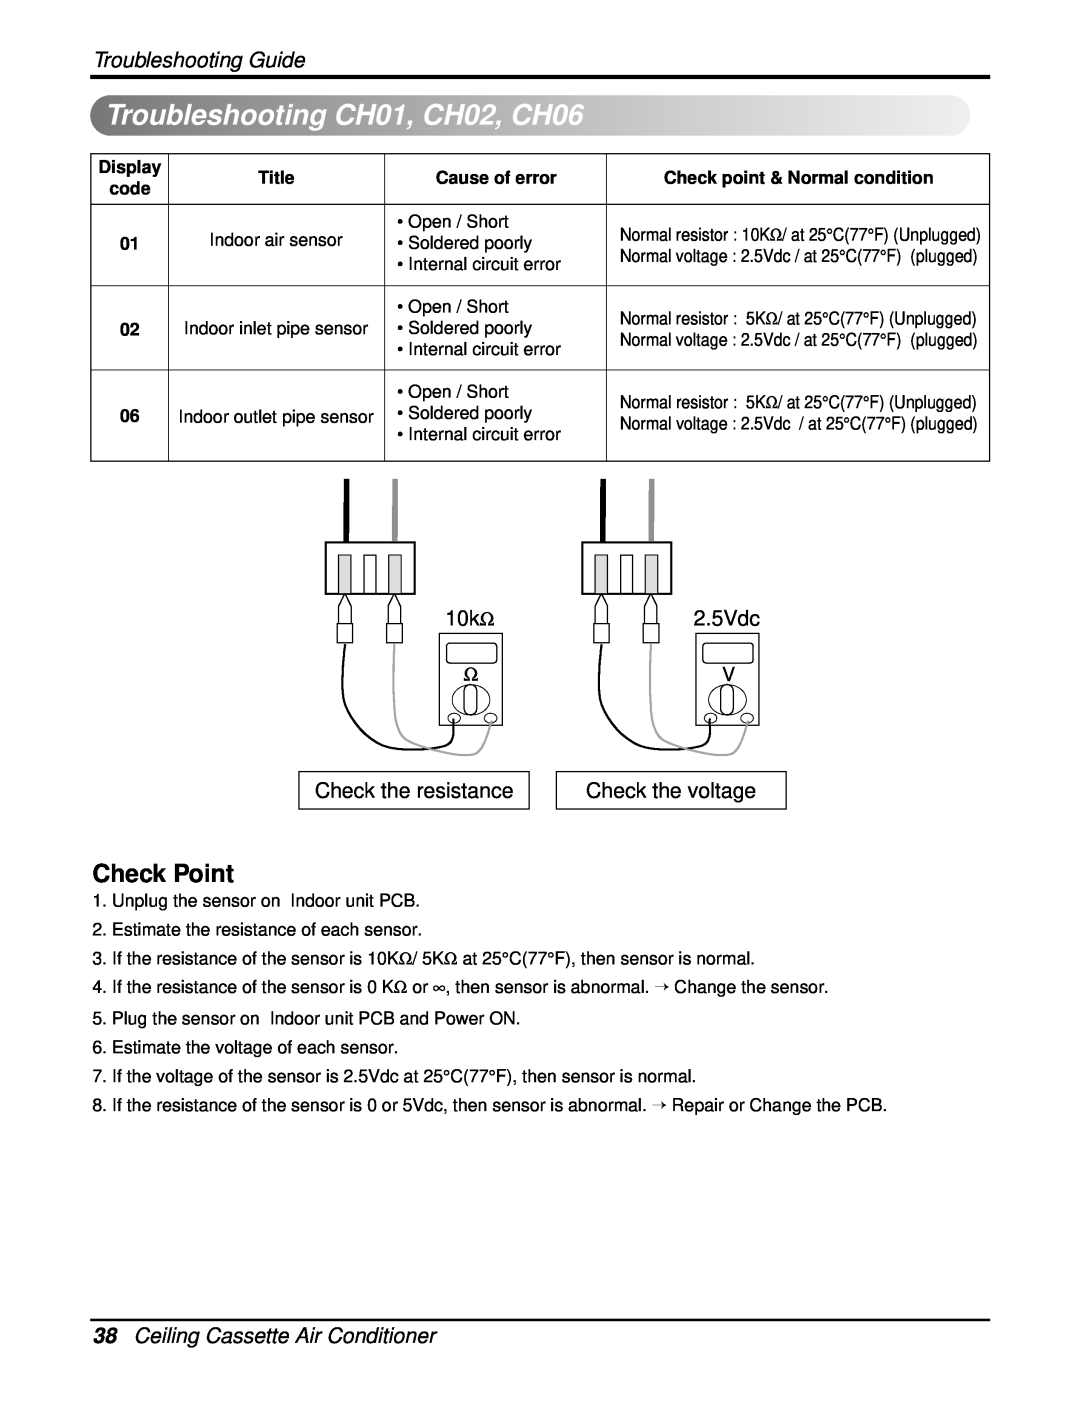 Heat Controller DMC24CA-1, DMC36CA-1 manual TroubleshootingCH01,CH02,CH06, Check Point, 38Ceiling Cassette Air Conditioner 